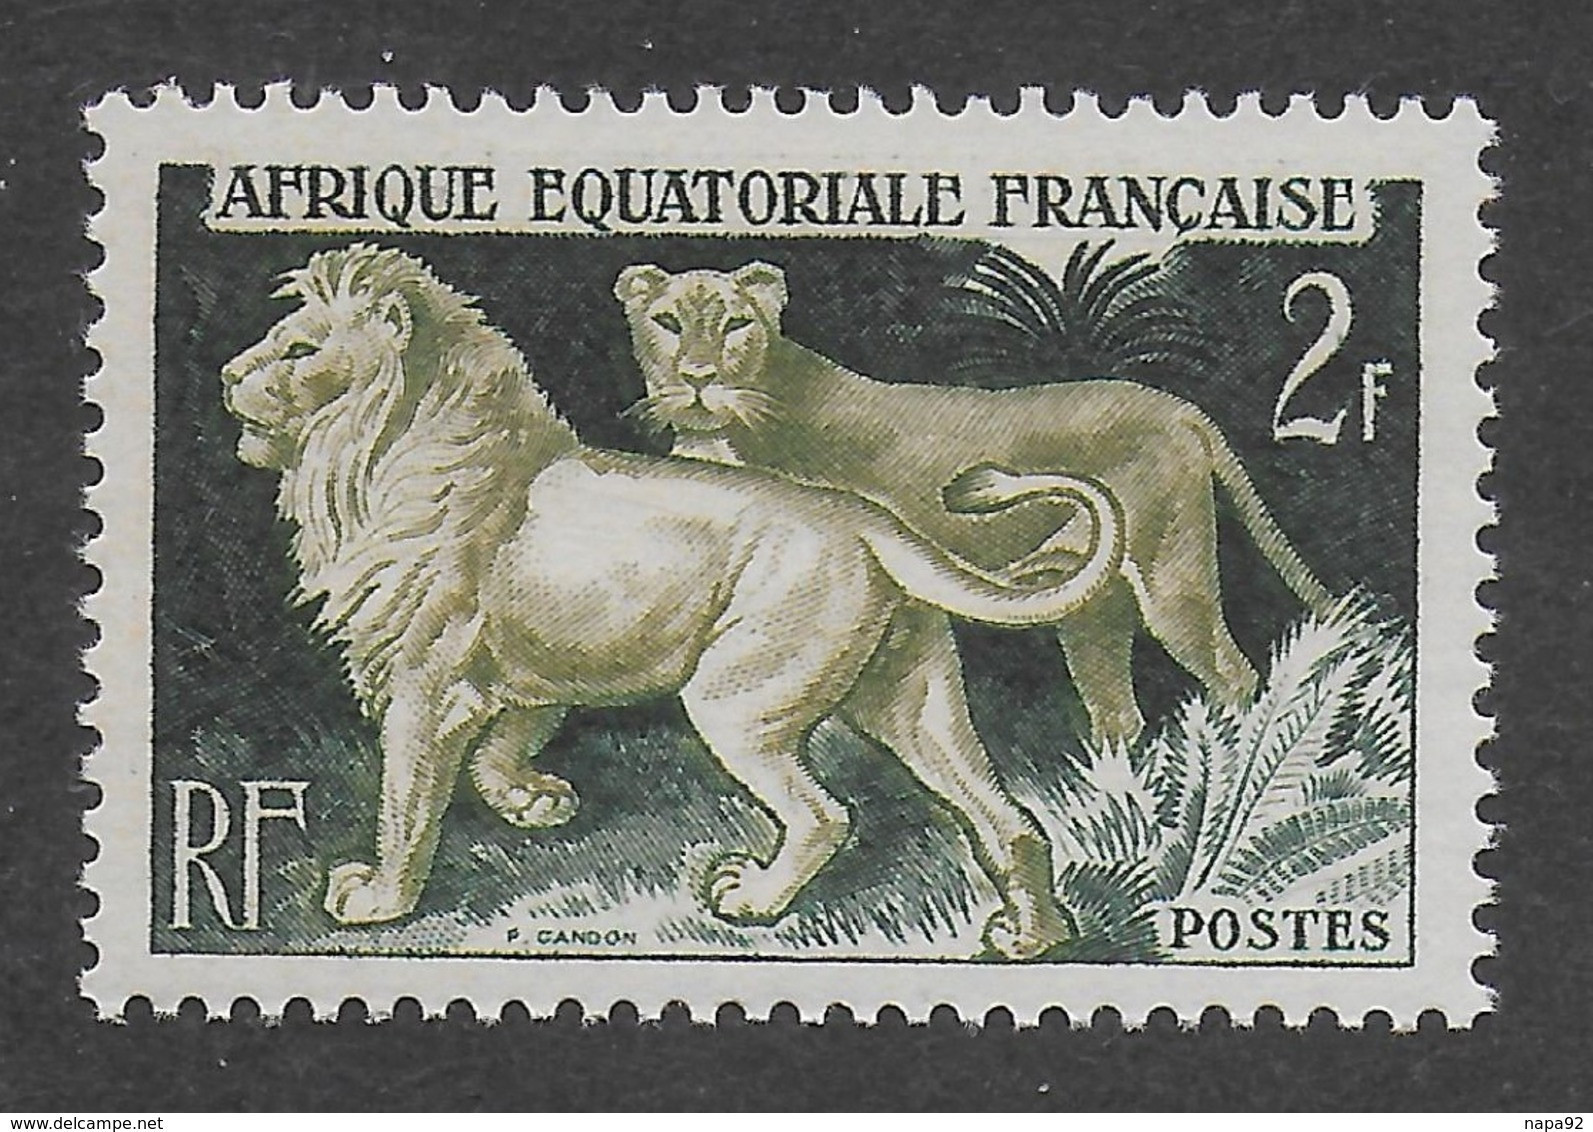 AFRIQUE EQUATORIALE FRANCAISE - AEF - A.E.F. - 1957 - YT 239** - MNH - Nuevos